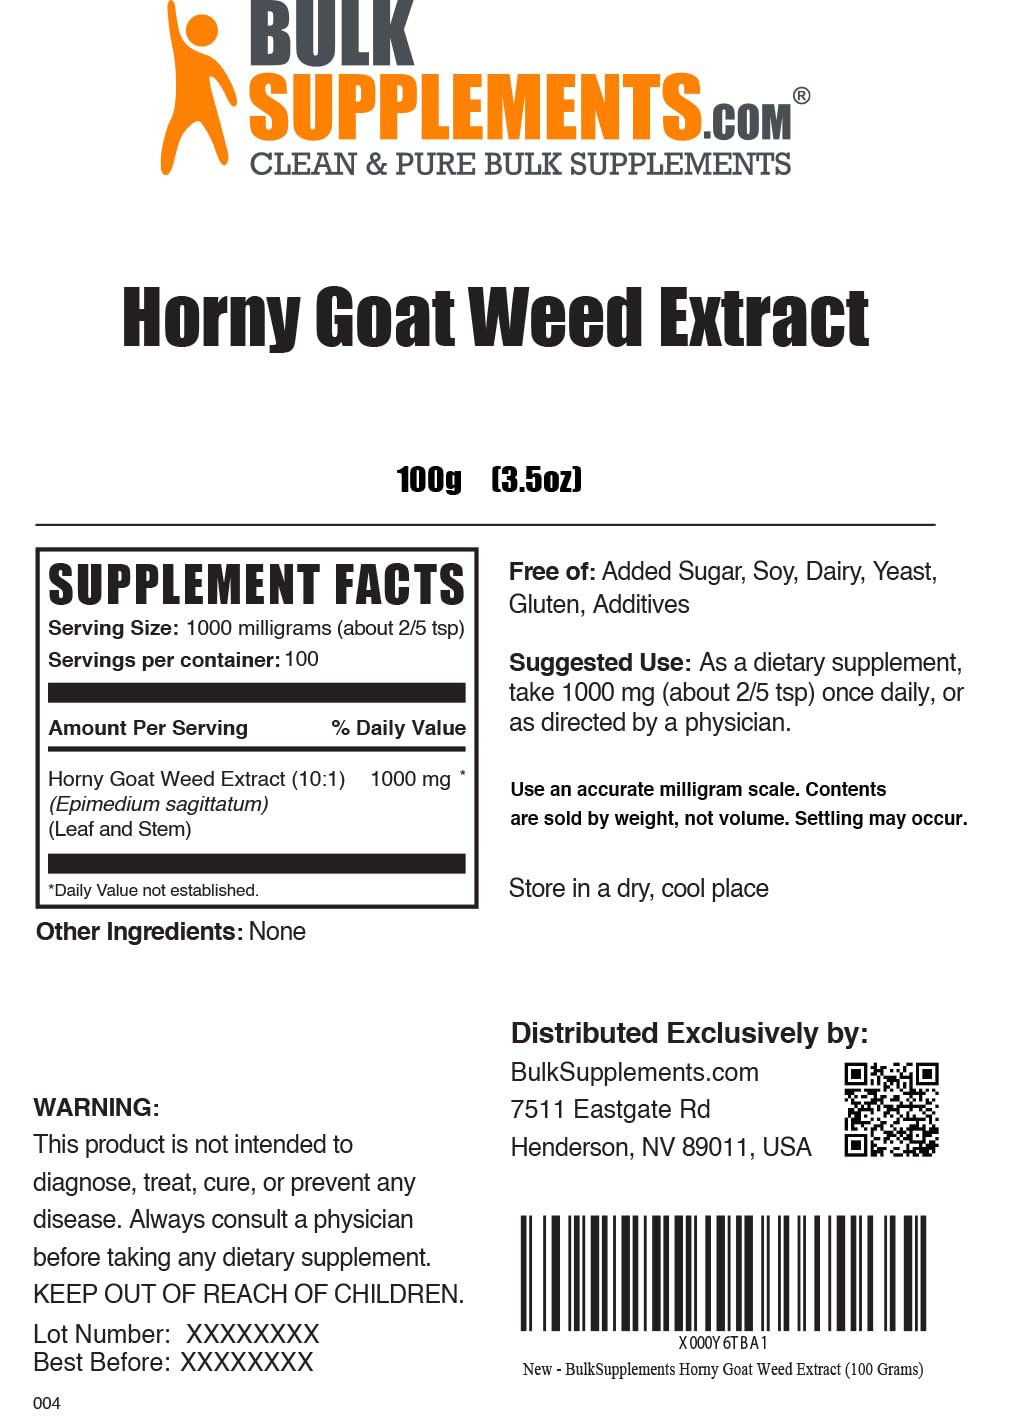 BULKSUPPLEMENTS.COM Horny Goat Weed Extract - Epimedium Extract, Horny Goat Weed Herbal Supplements, Horny Goat Weed Powder - Horny Goat Weed for Men & Women, 1000mg per Serving, 100g (3.5 oz)